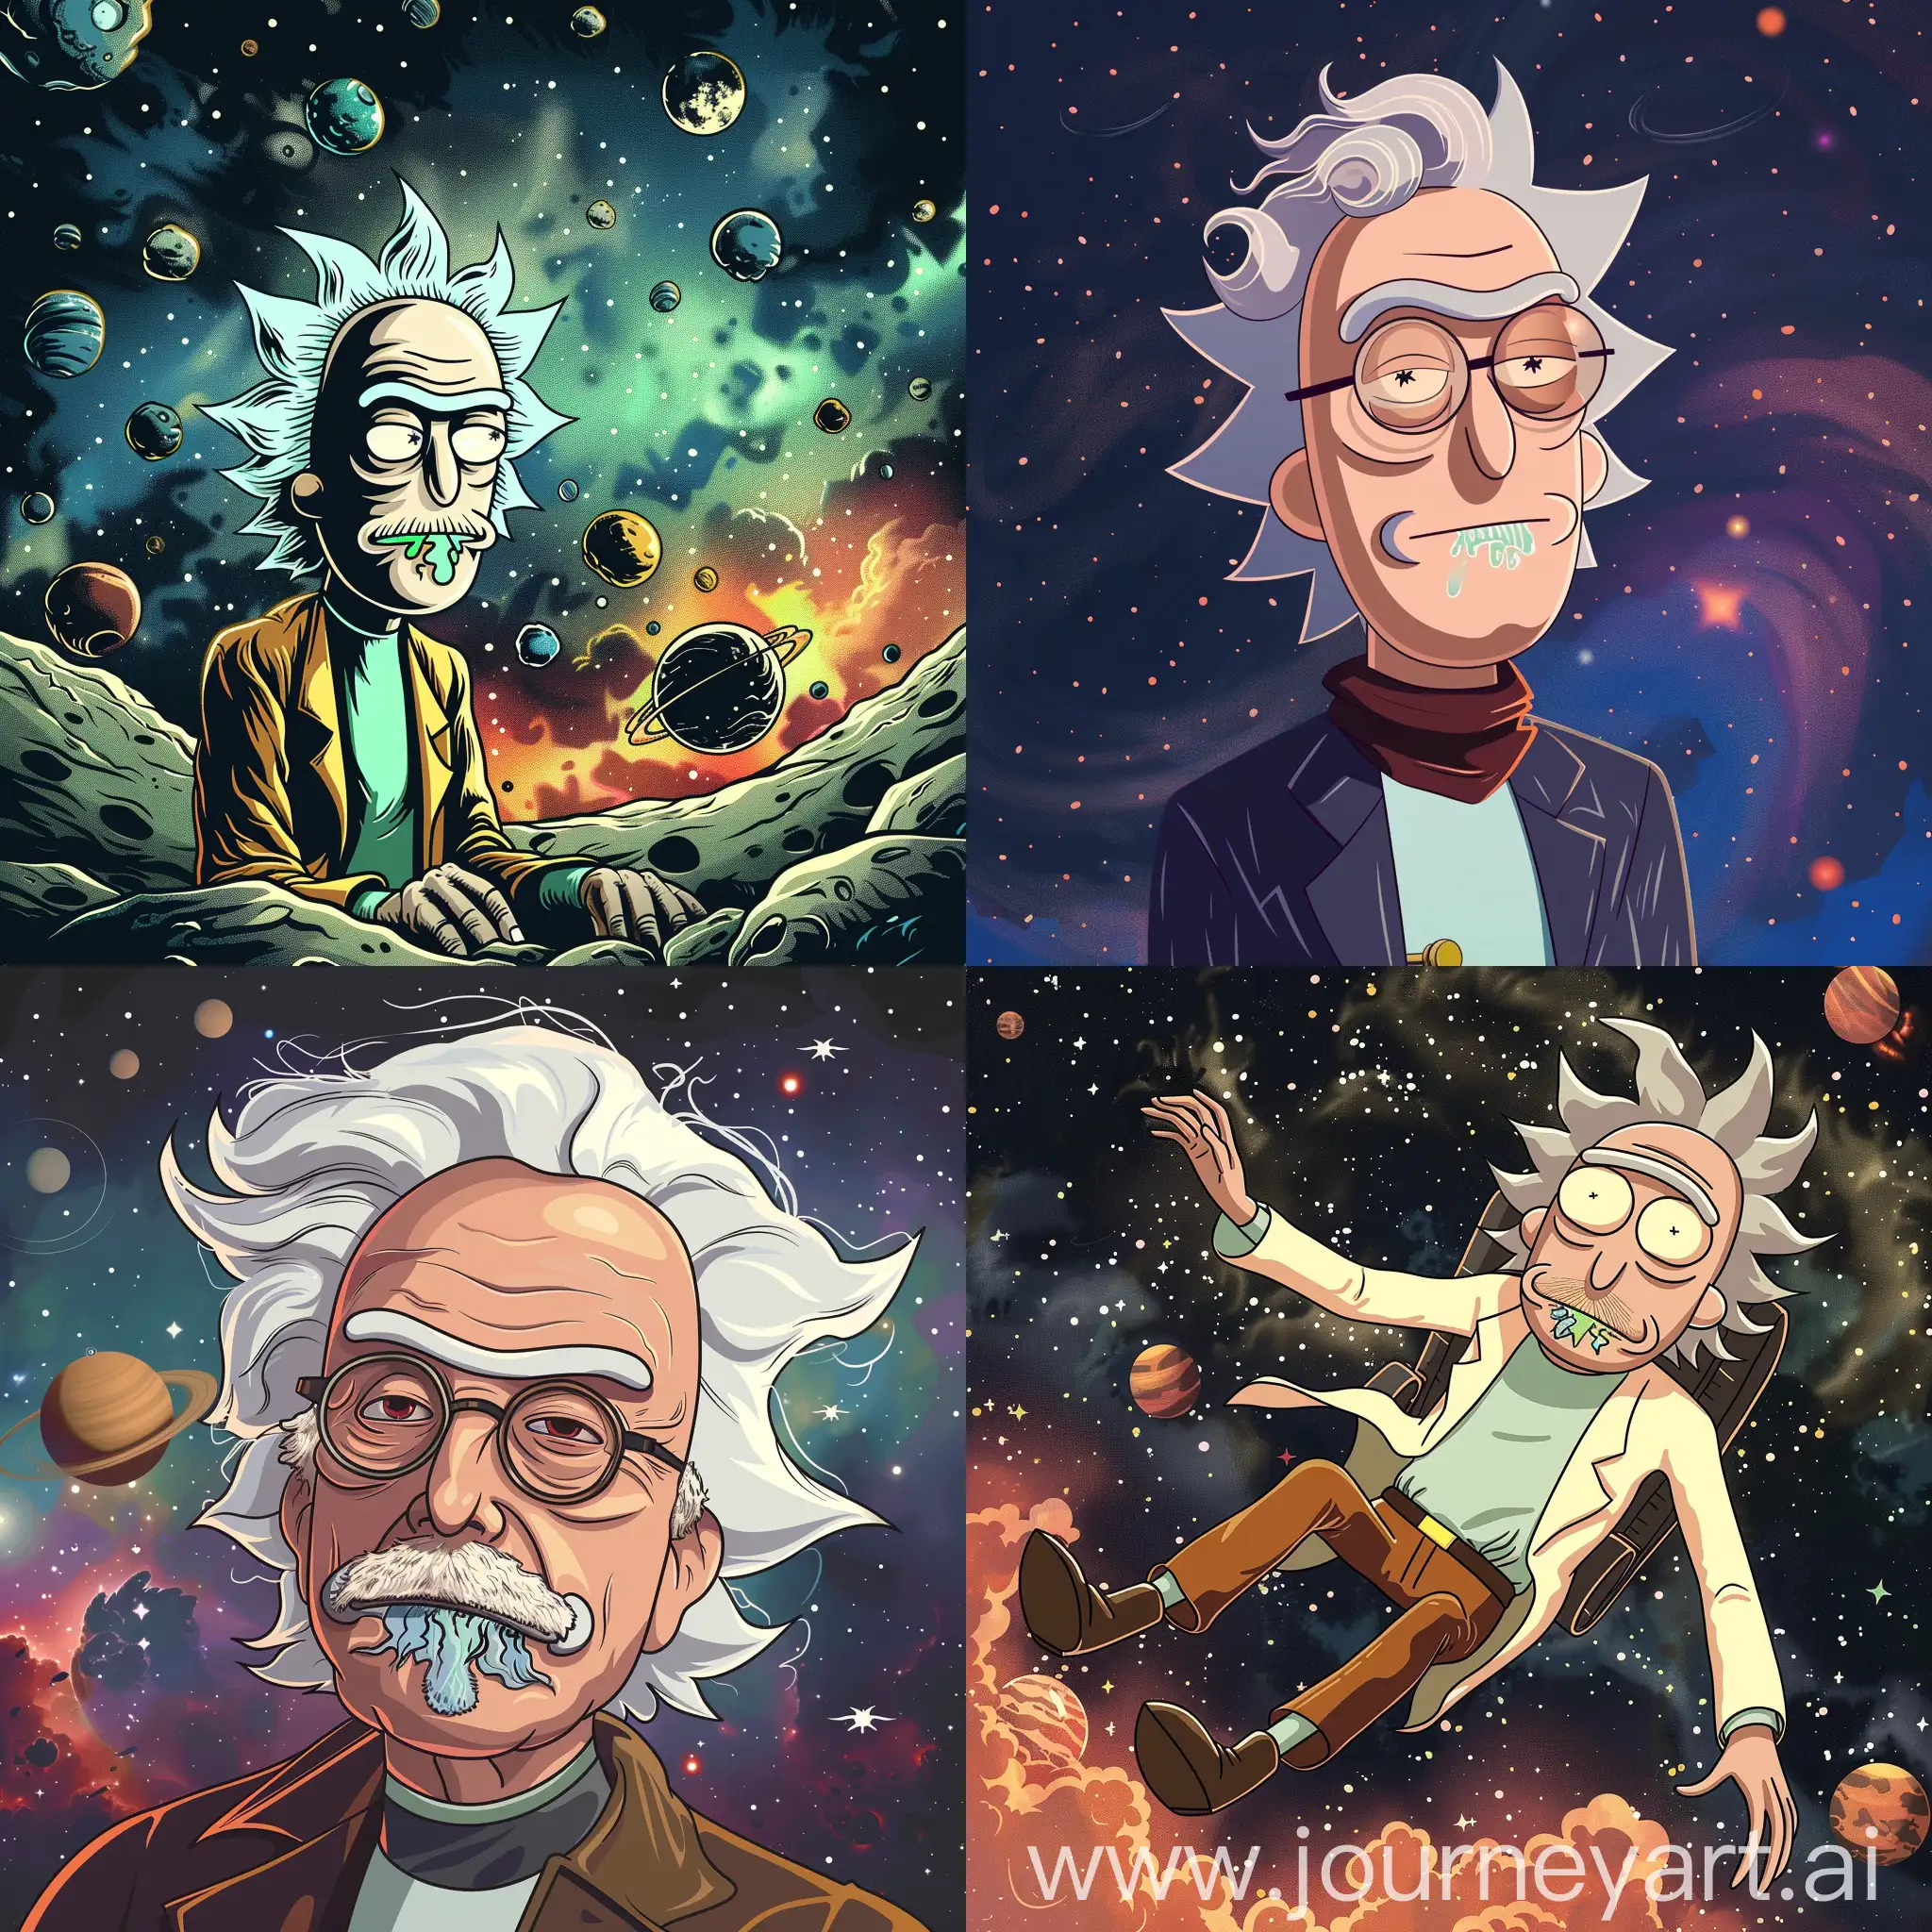 Albert-Einstein-in-Space-Rick-and-Morty-Cartoon-Style-Artwork